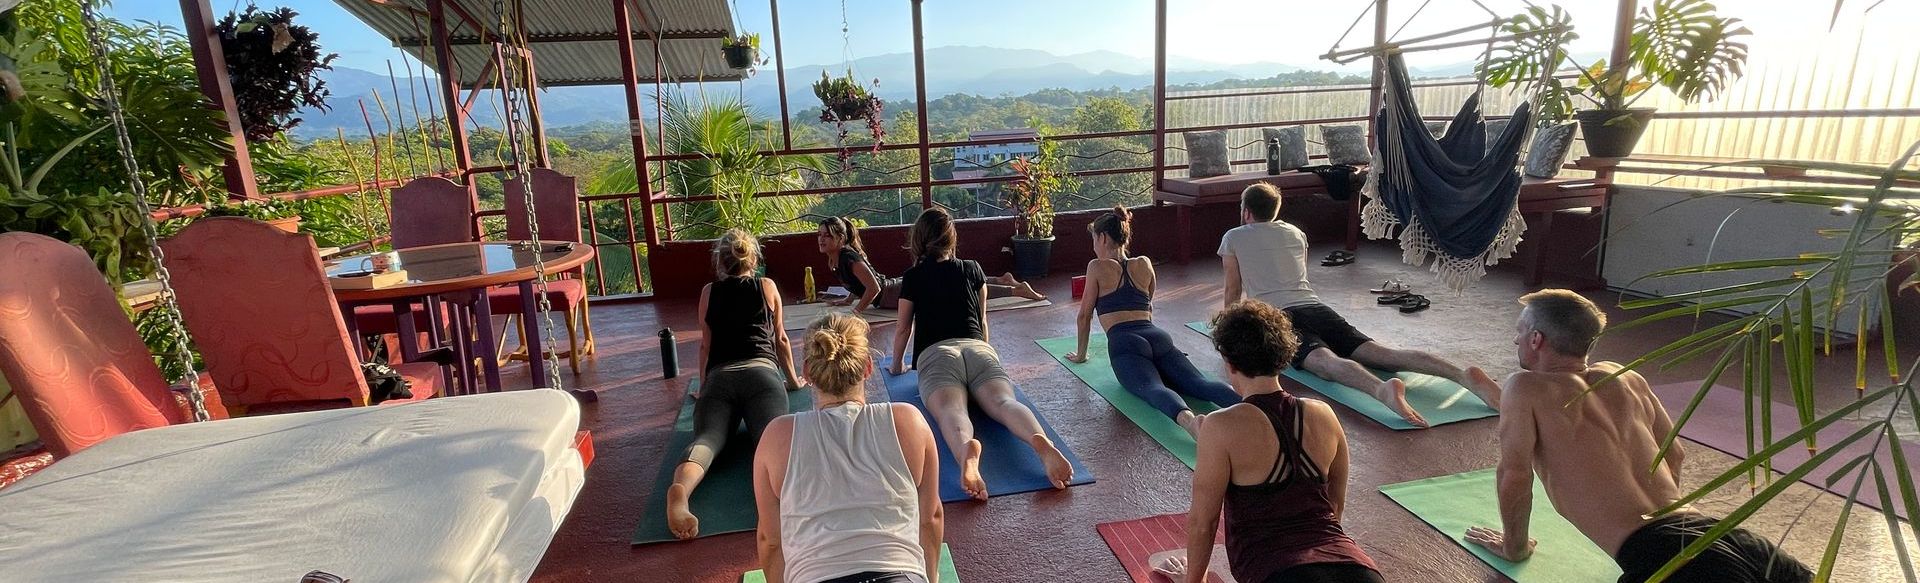 Villas Jacquelina yoga retreat venue costa rica